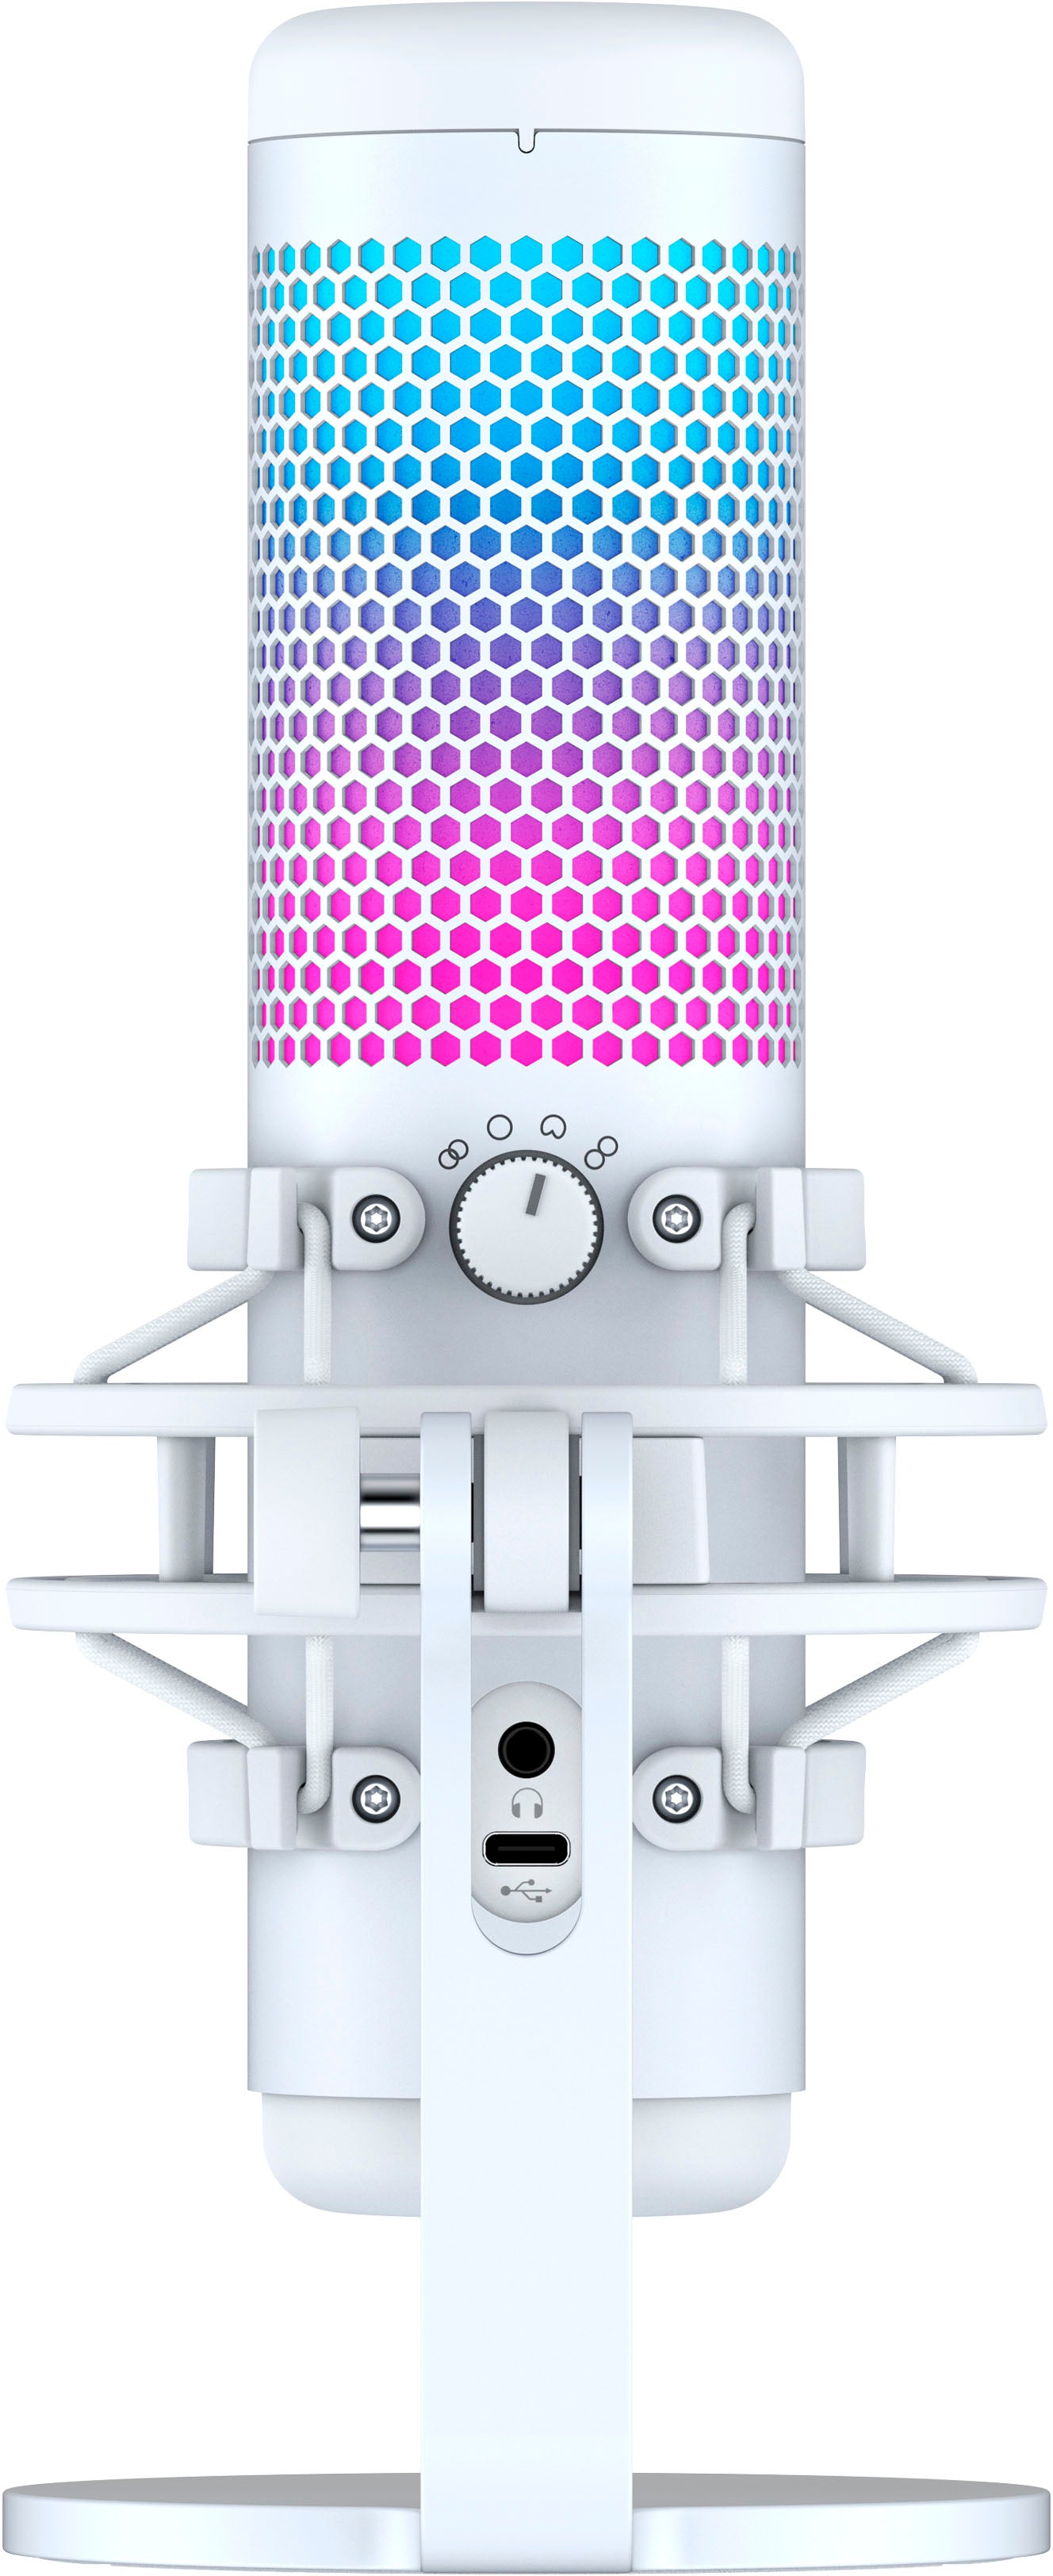 HyperX QuadCast S USB Microphone-White/Grey